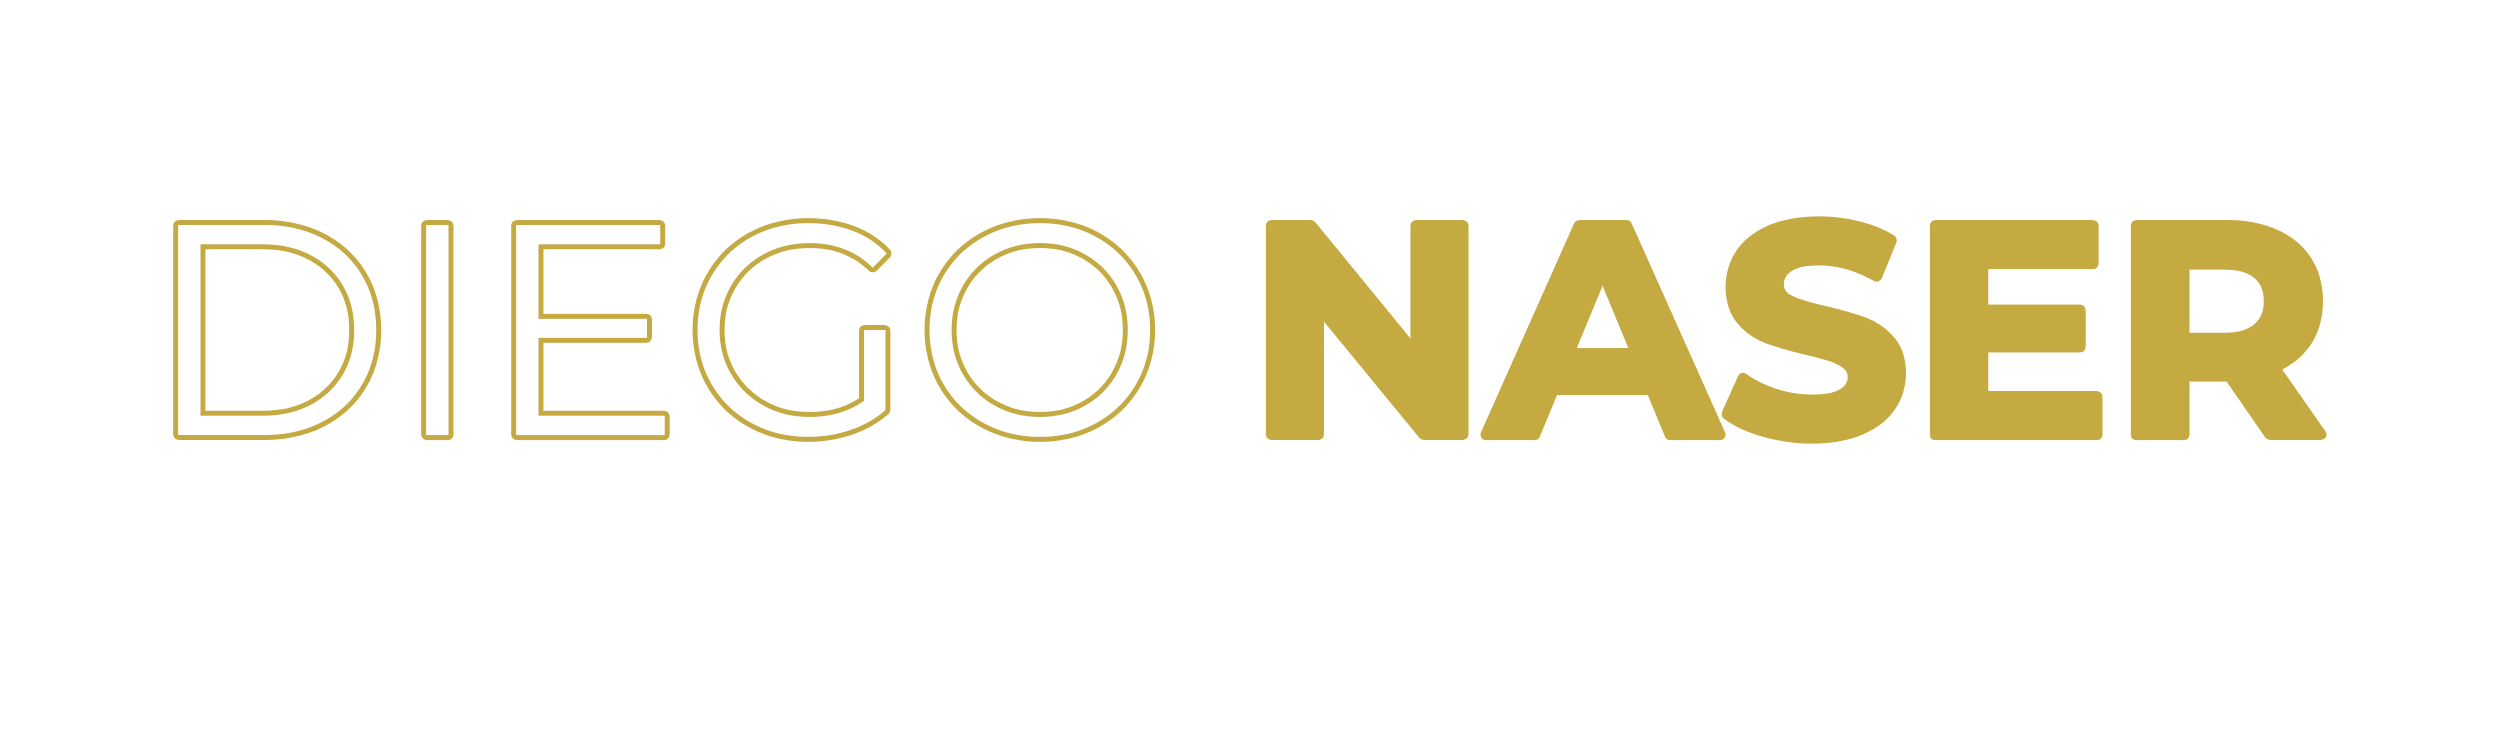 Diego Naser Official Site